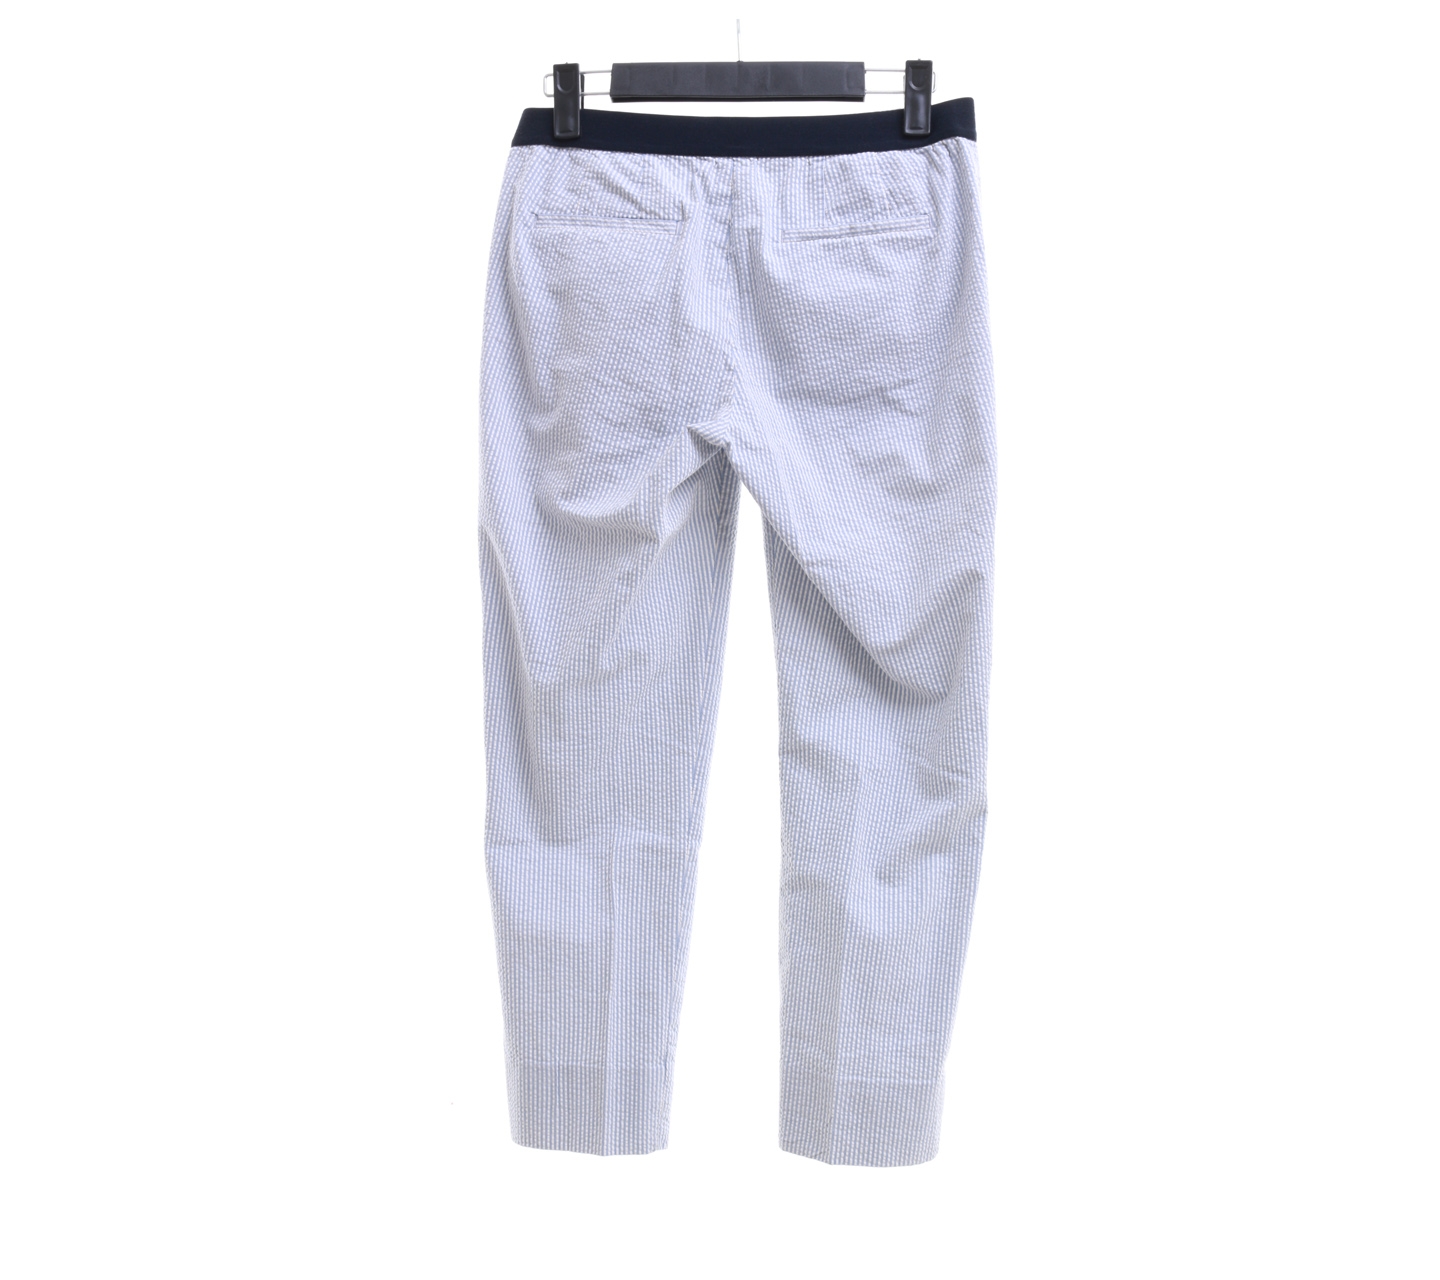 Uniqlo Striped Blue & White Long Pants 